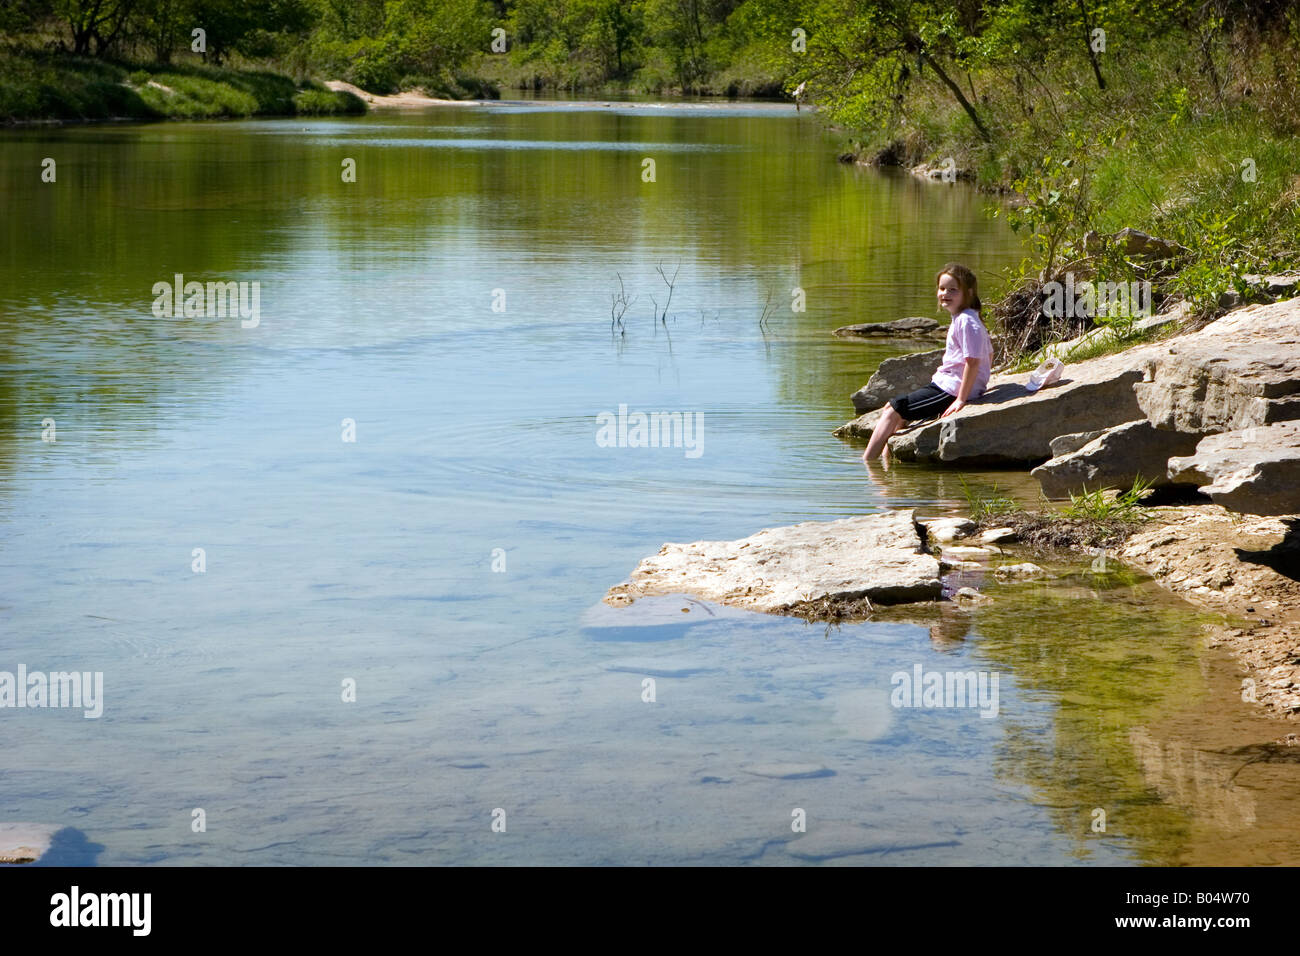 Young girl enjoying the natural Texan landscape. Stock Photo